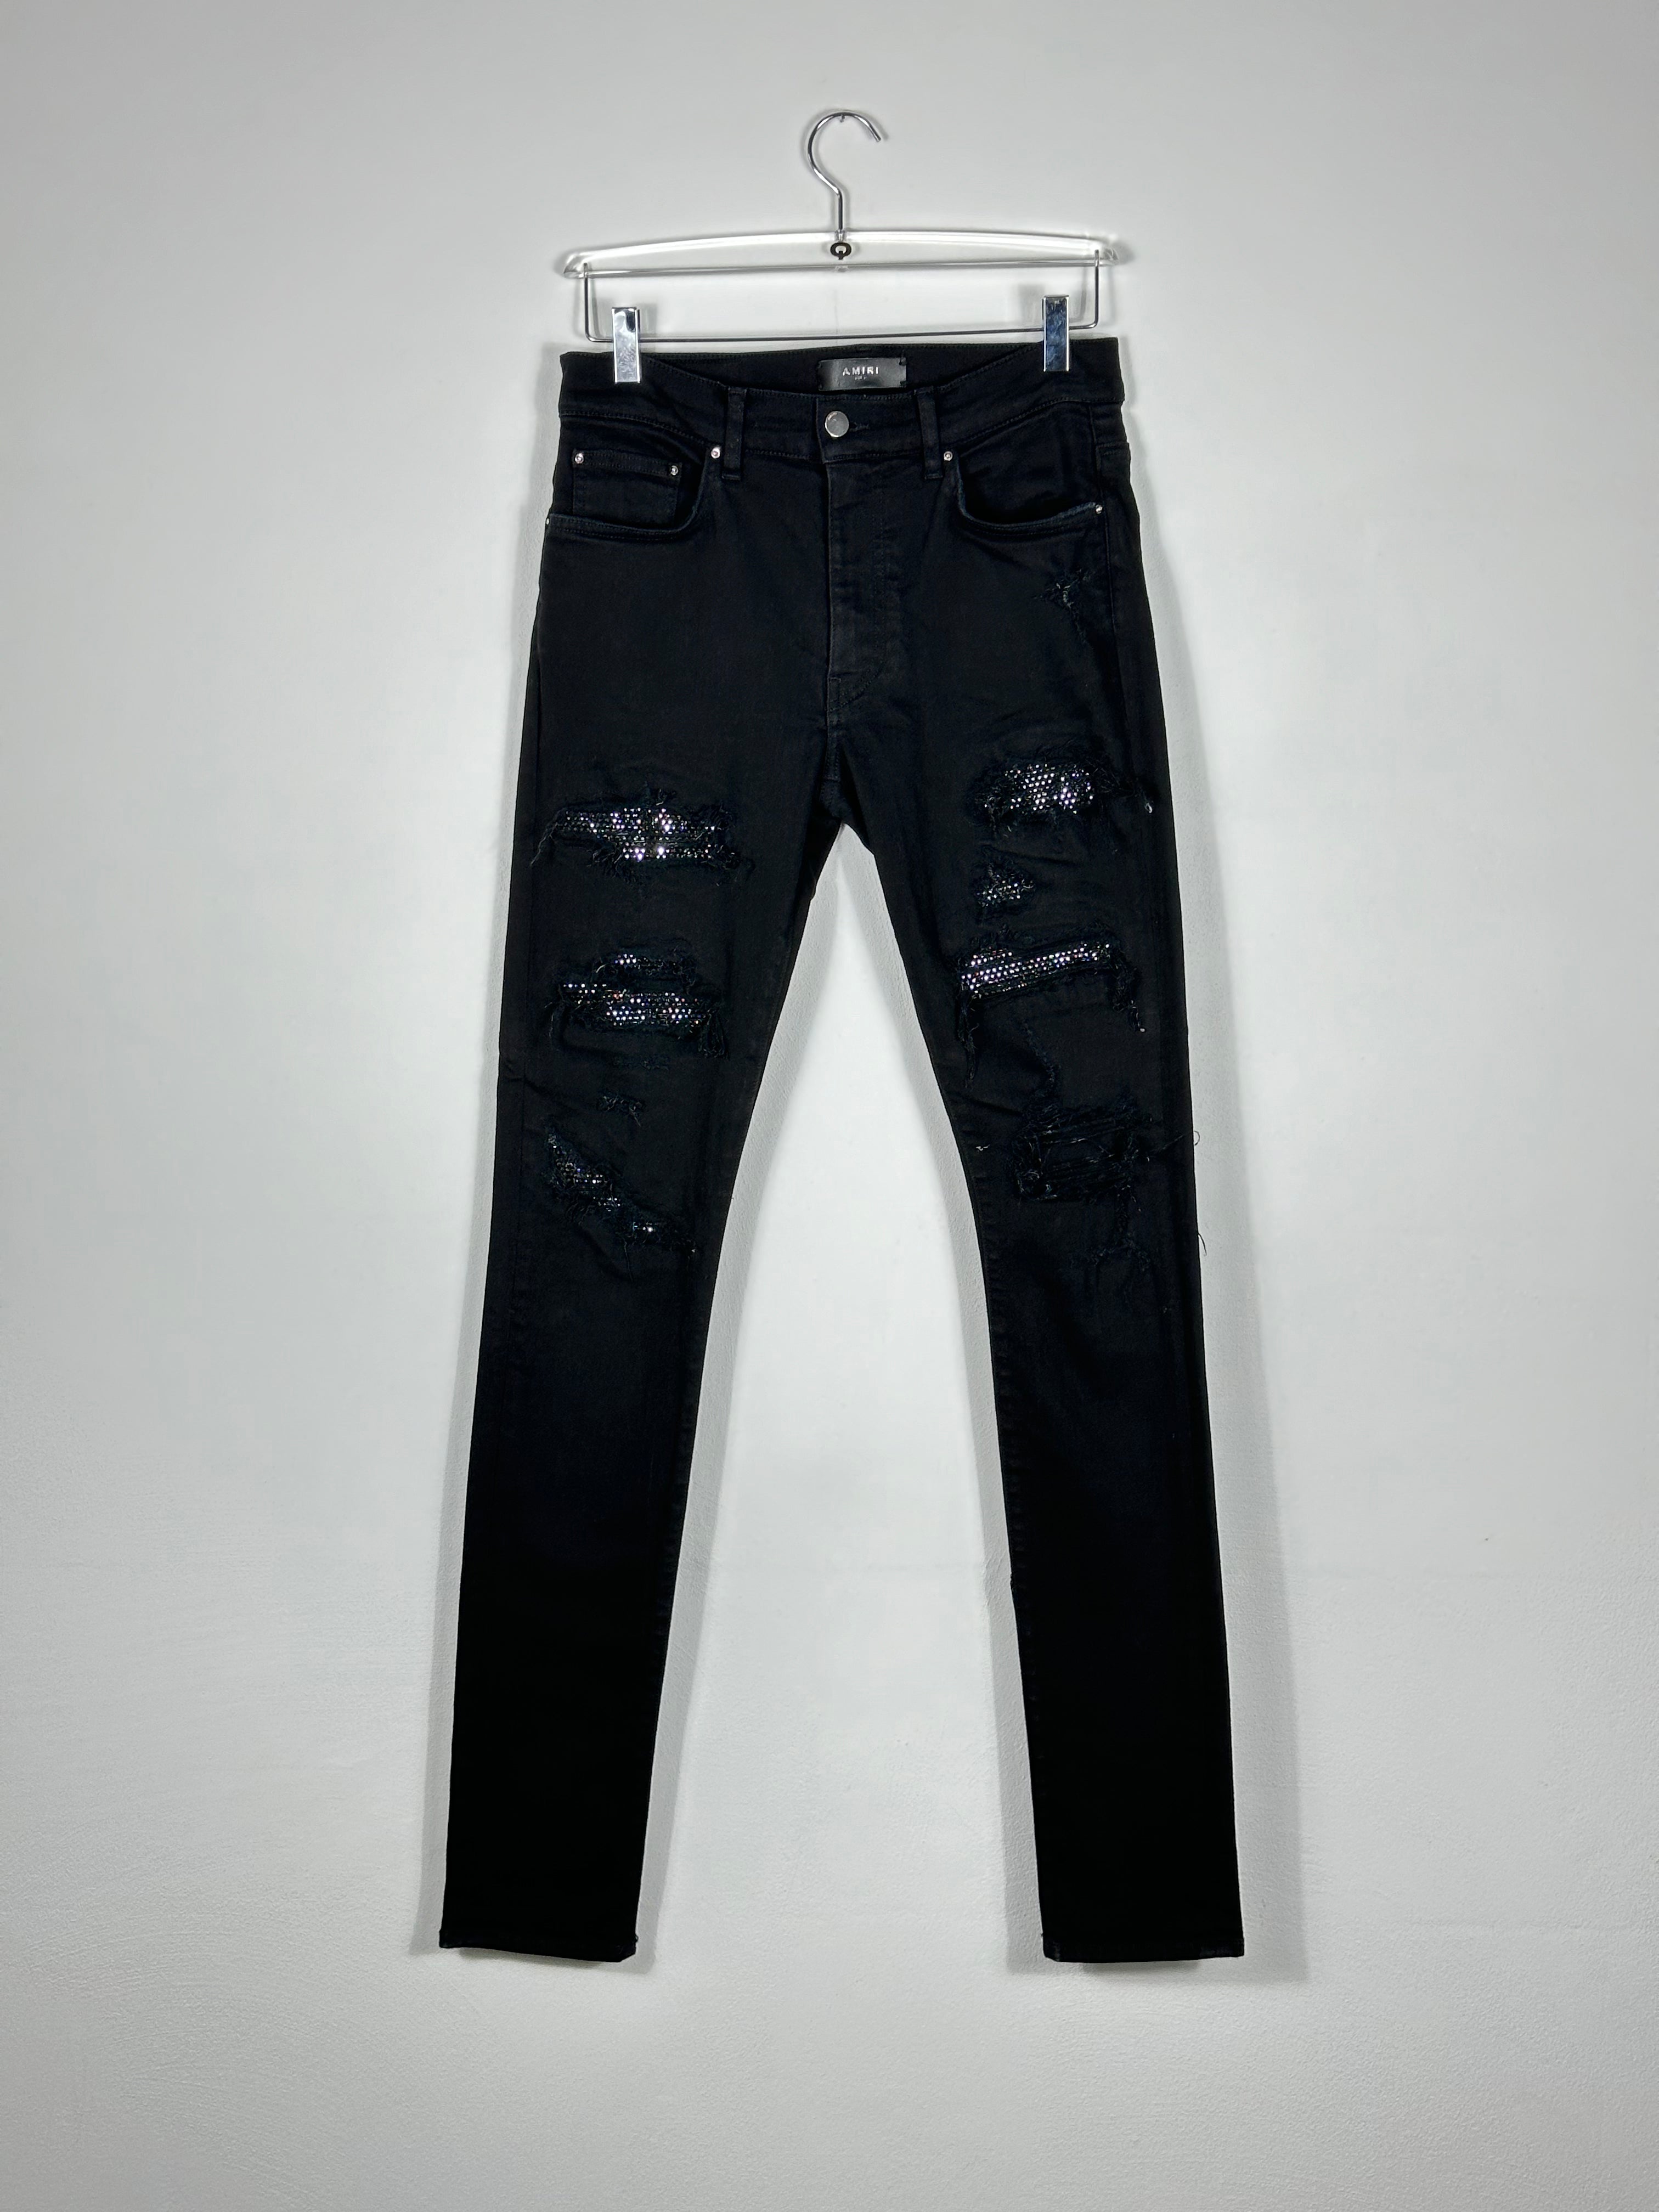 Rhinestone Jeans